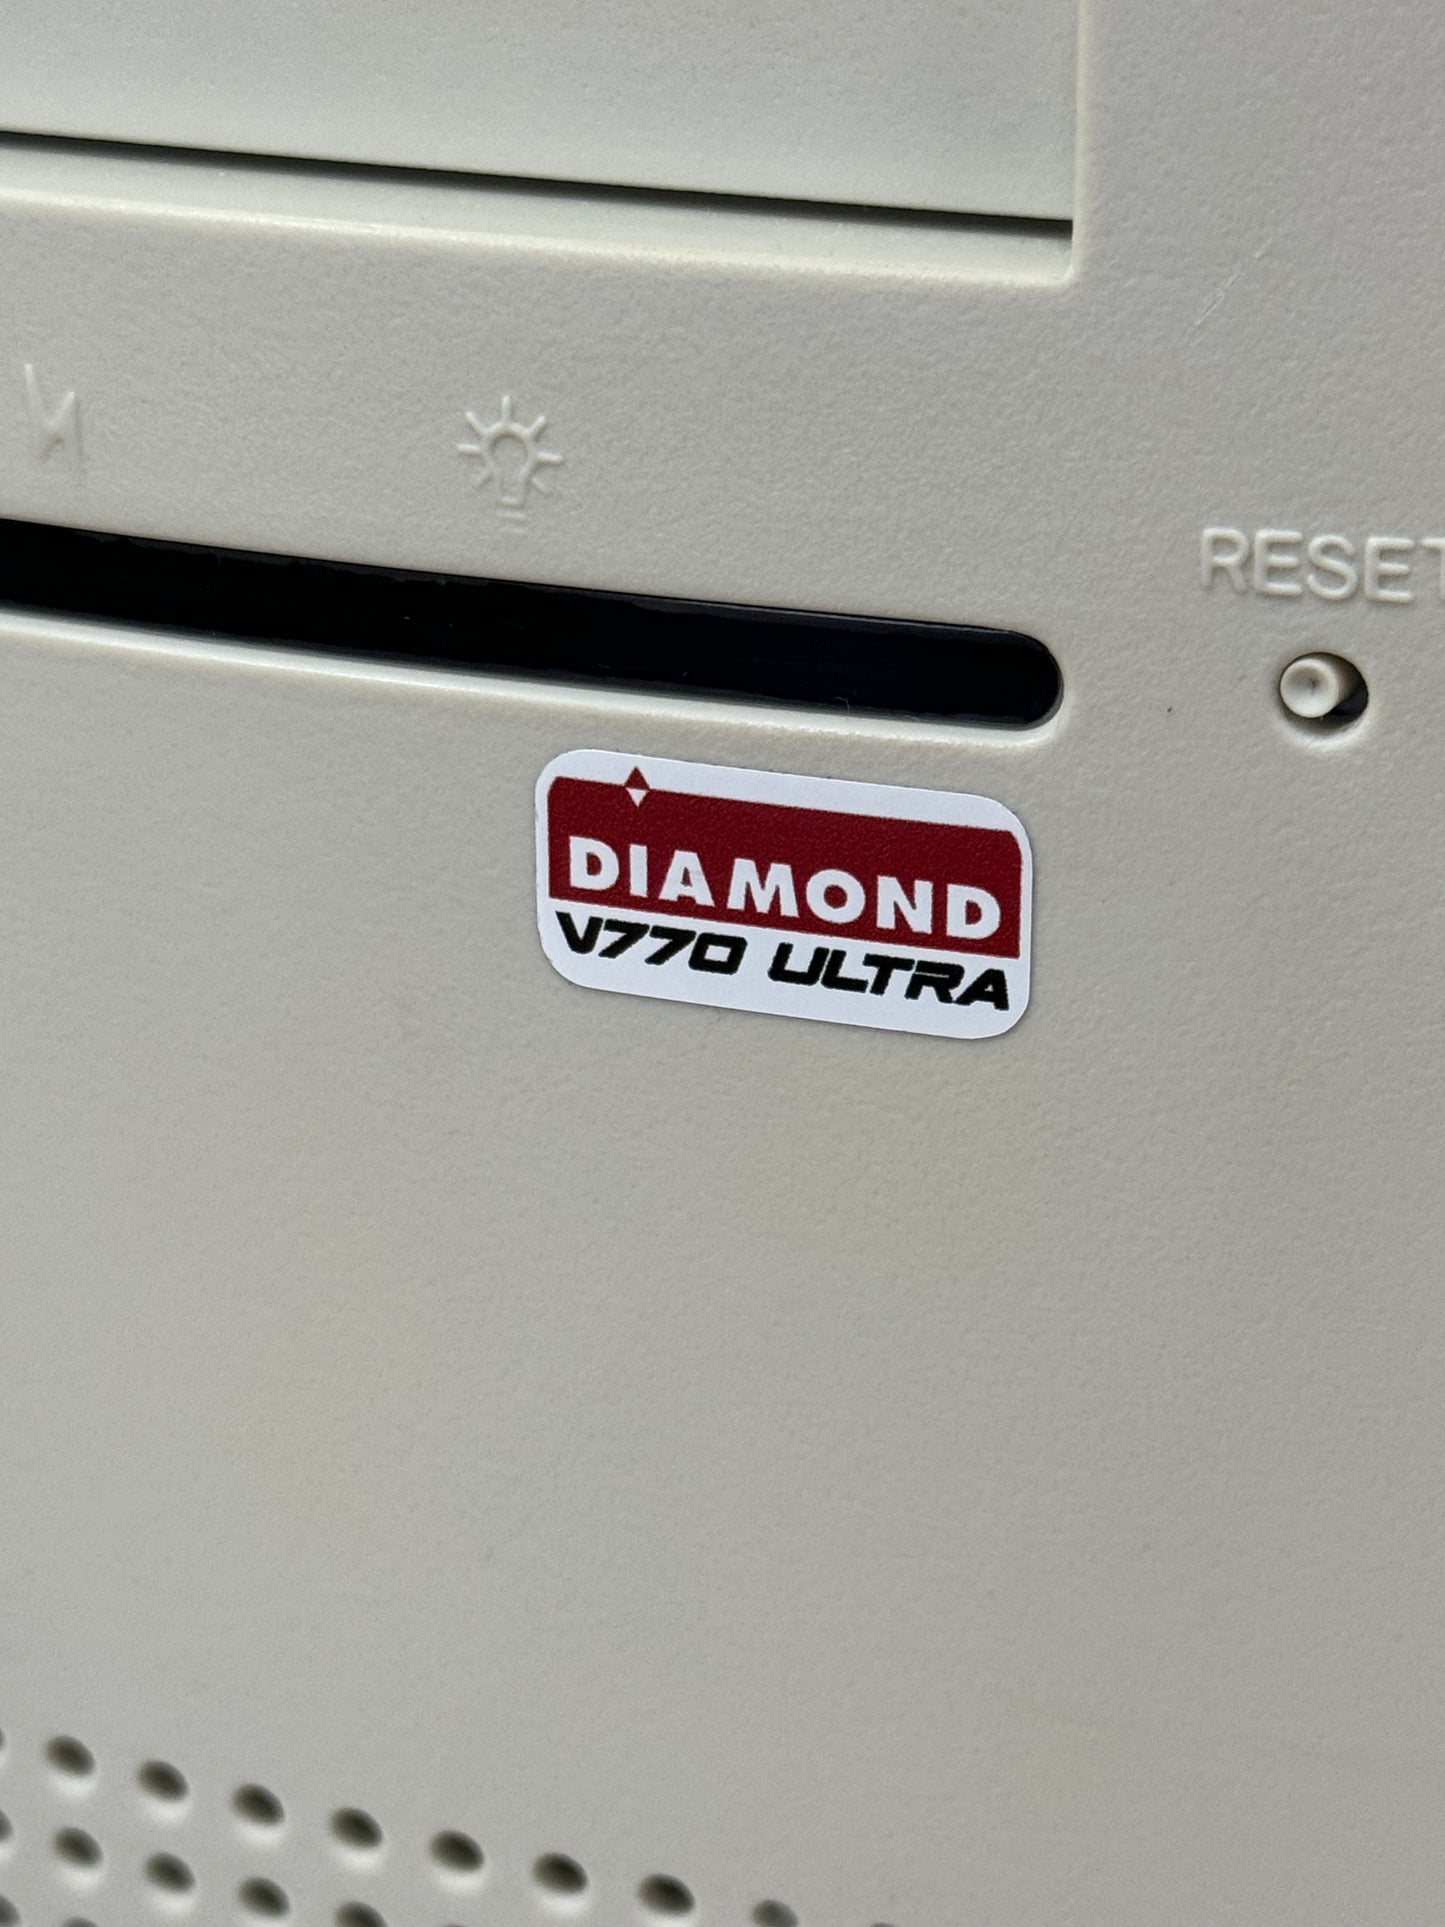 Diamond V770 ULTRA Viper Video Graphics Case Badge Sticker - White